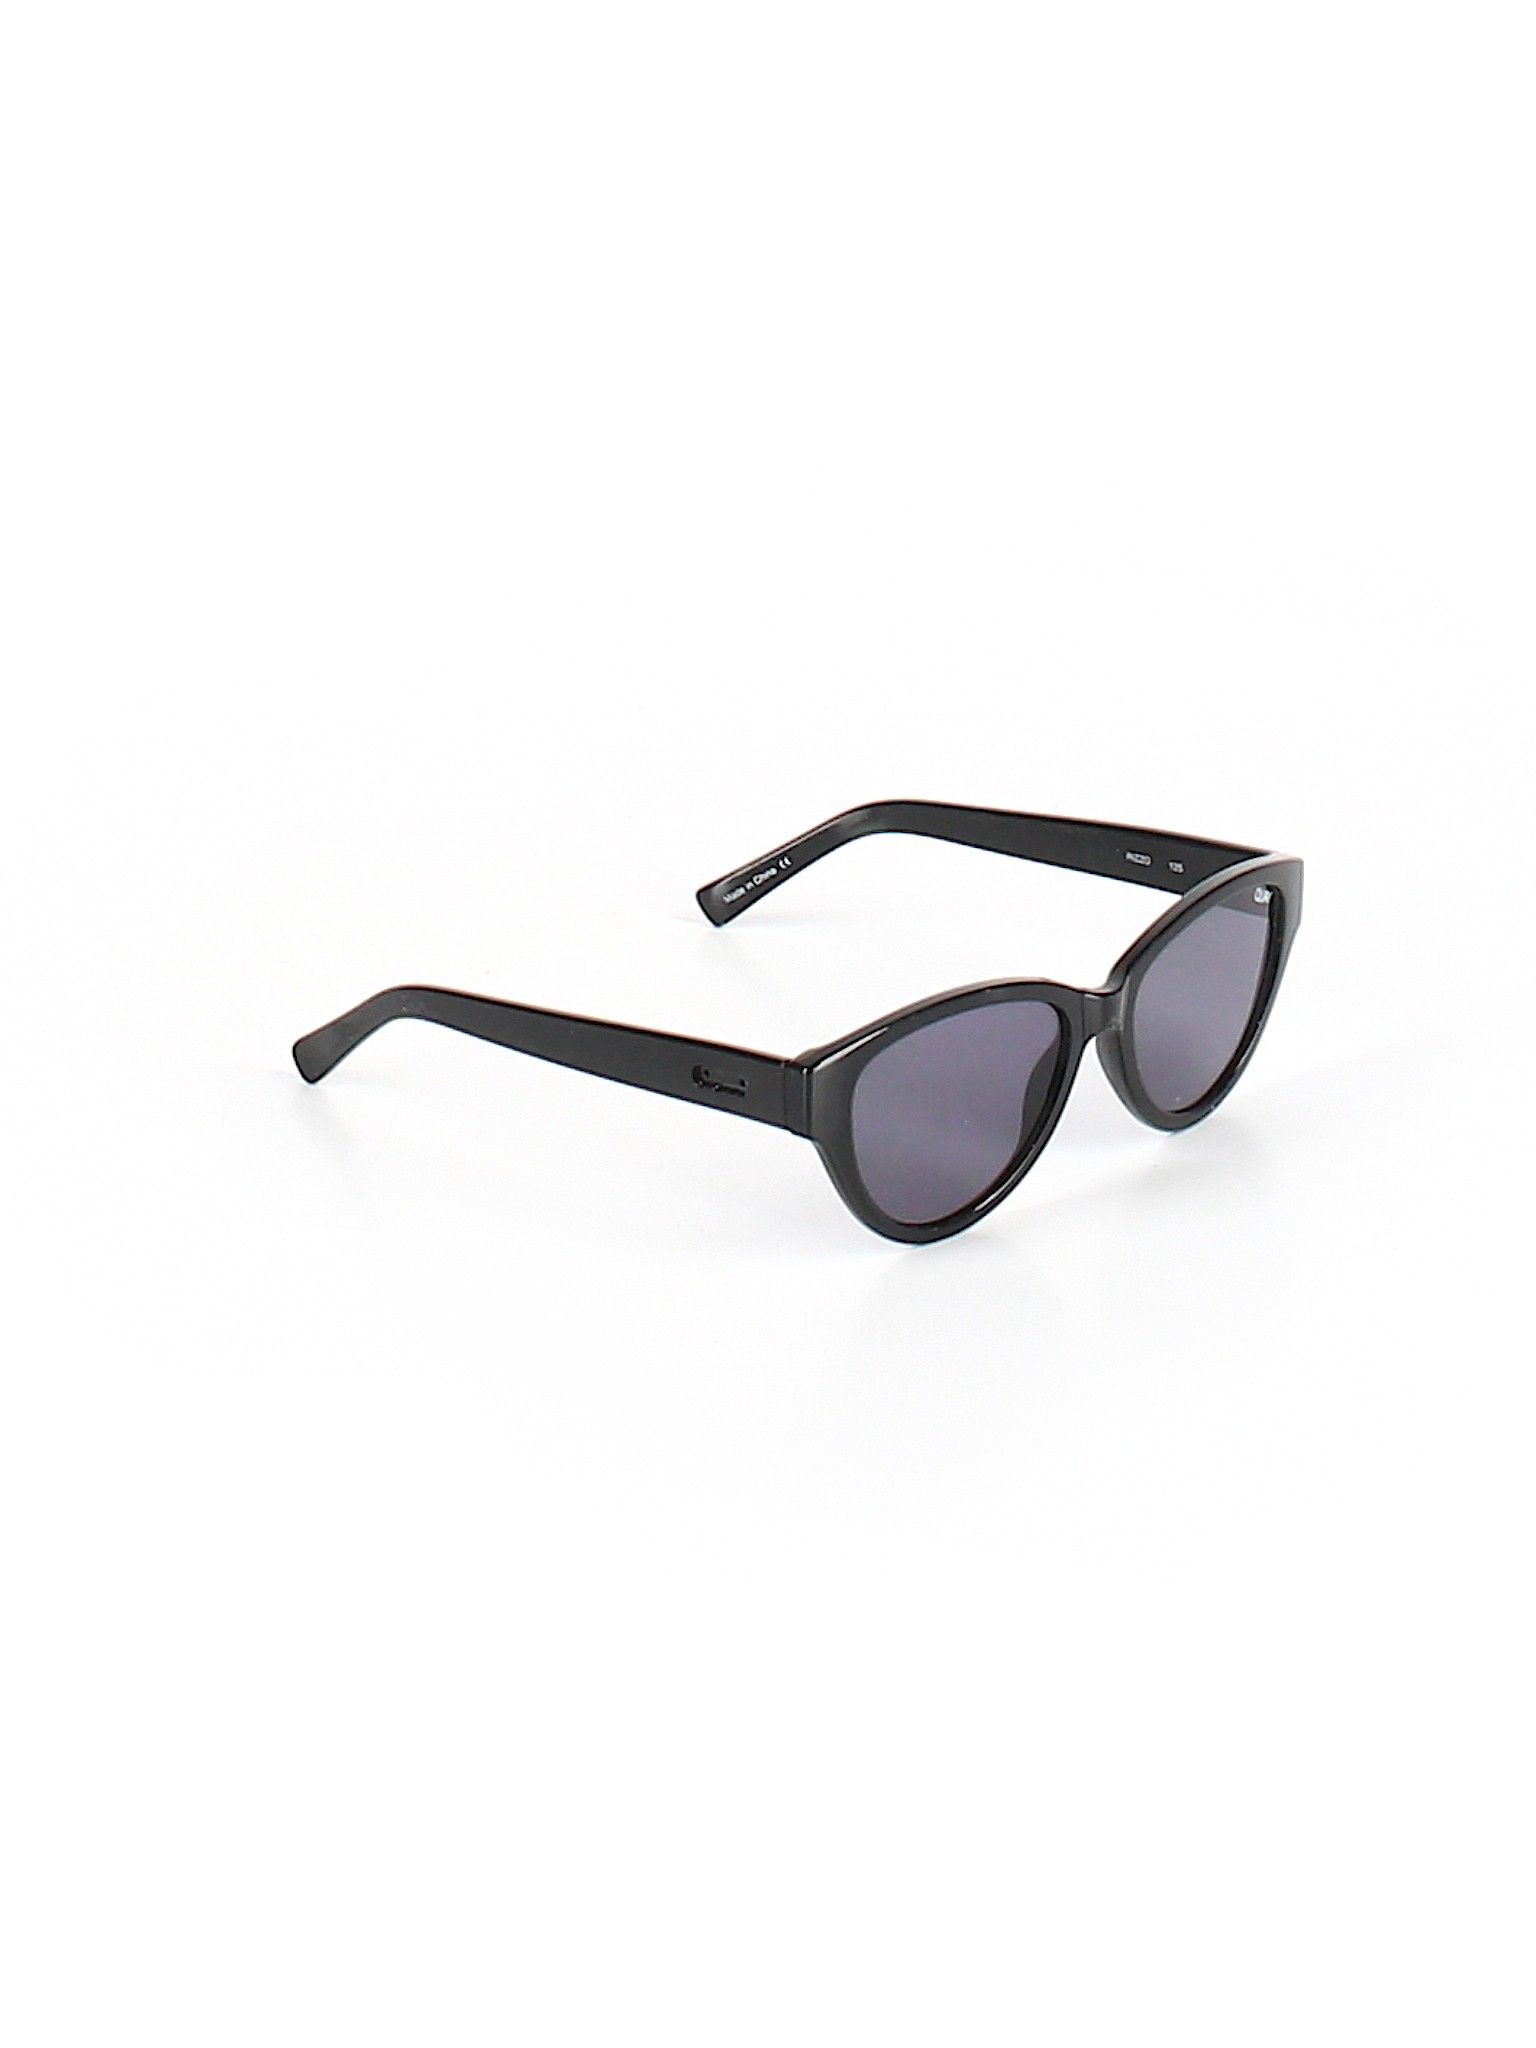 Quay Sunglasses Size 00: Black Women's Accessories - 45699801 | thredUP